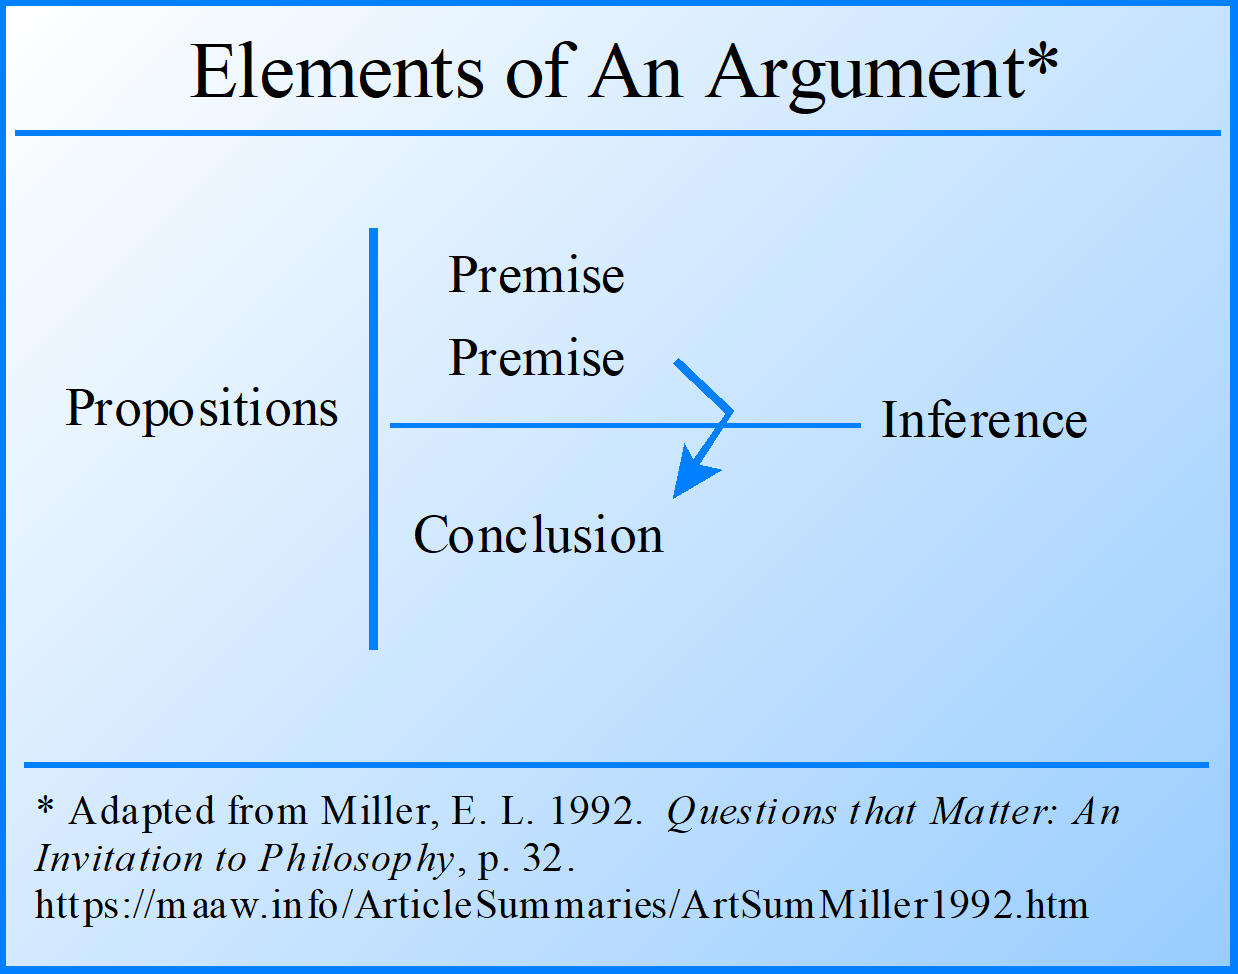 Elements of An Argument